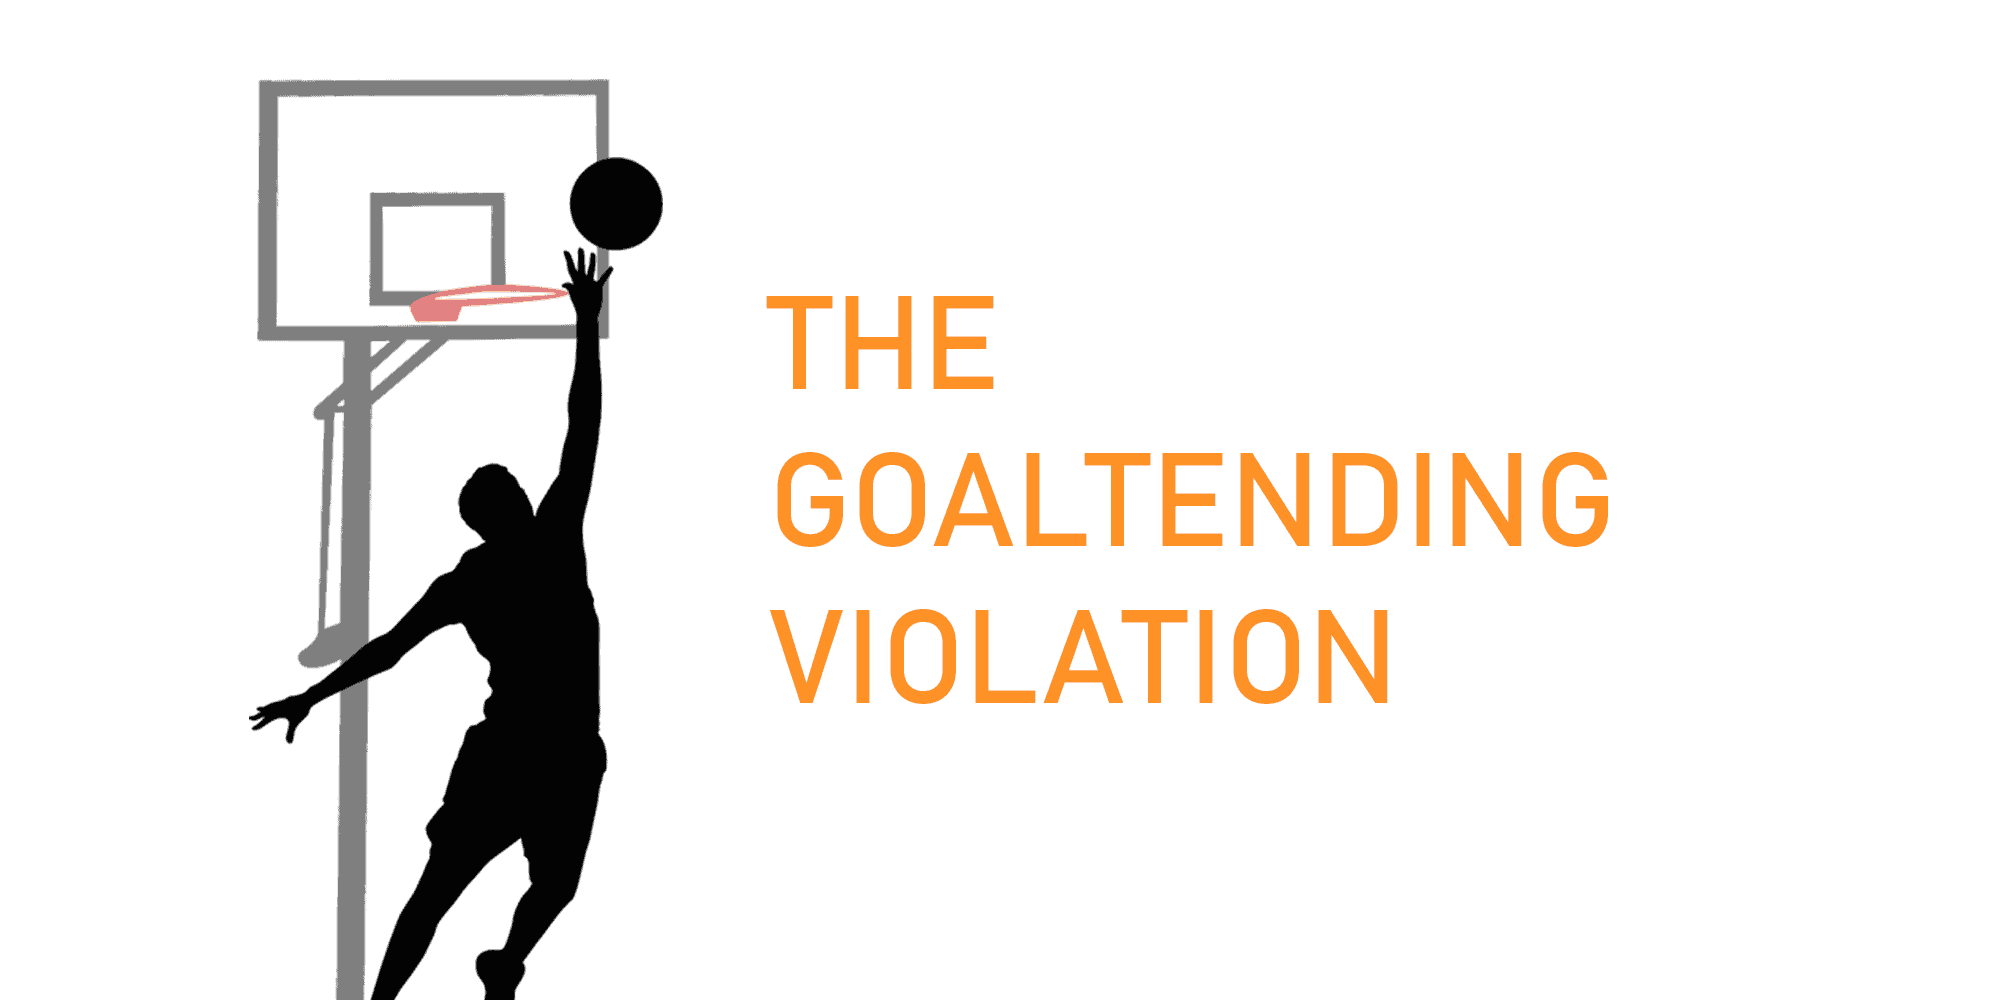 hoopsbeast goaltending violation explanation article cover image